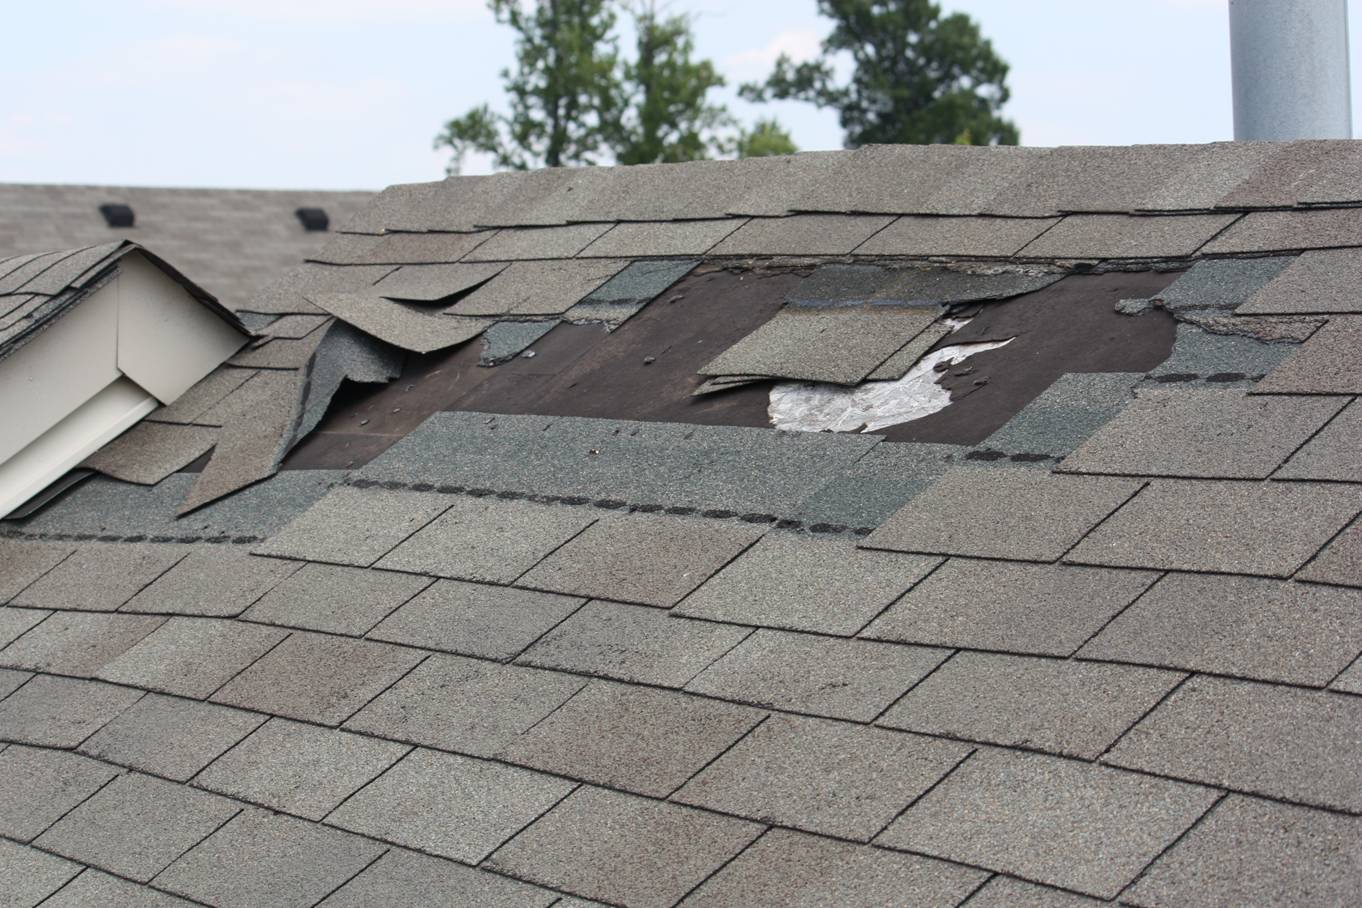 Repairing Damaged Roof Tiles